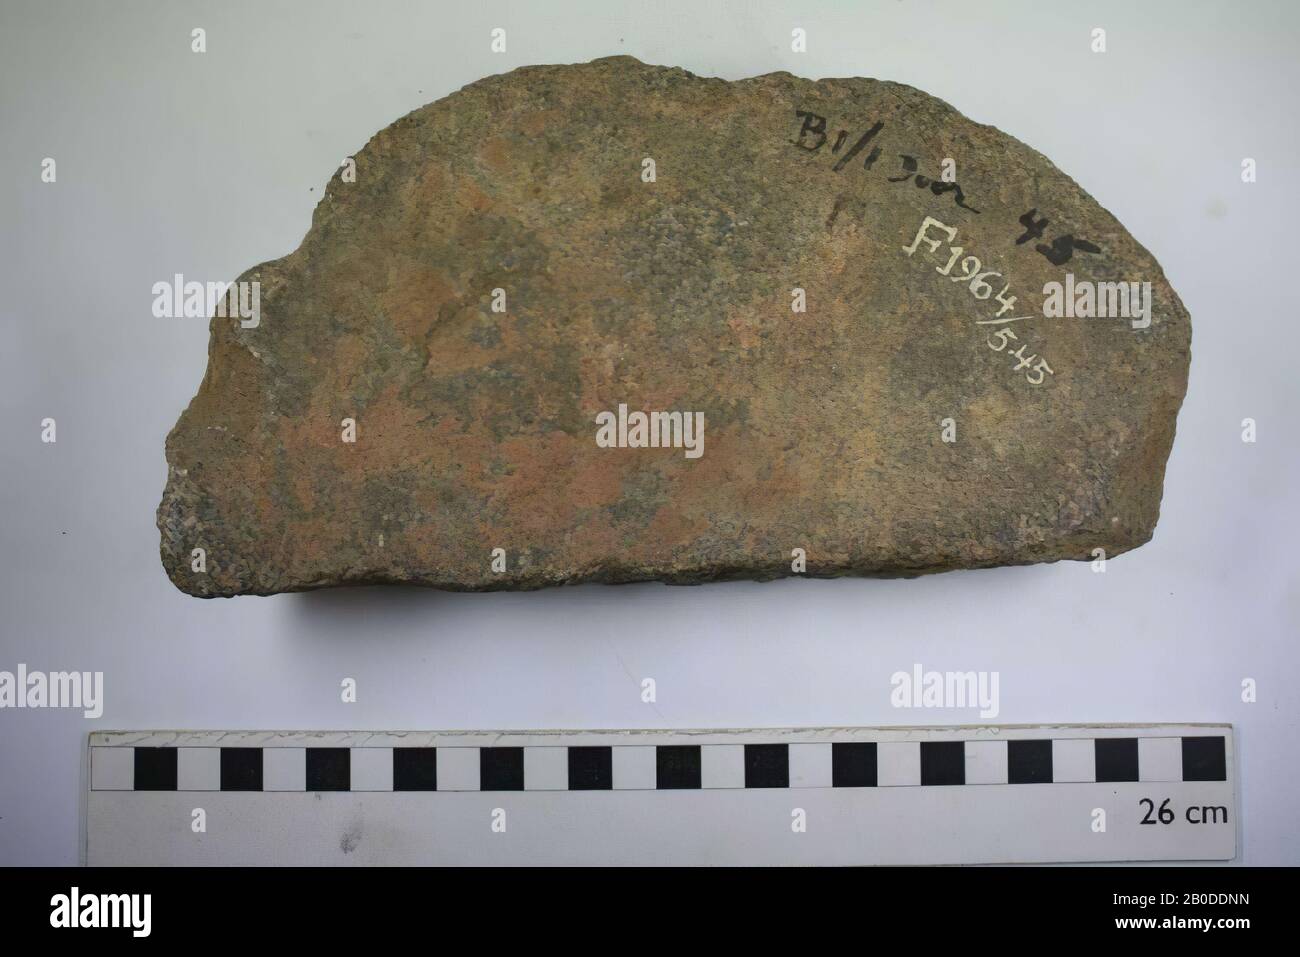 refresher, half, half of light, hollowed out grinder, grinder, granite, 0.6 x 0.5 cm, Meroitische Period, 2nd-4th century, Egypt Stock Photo